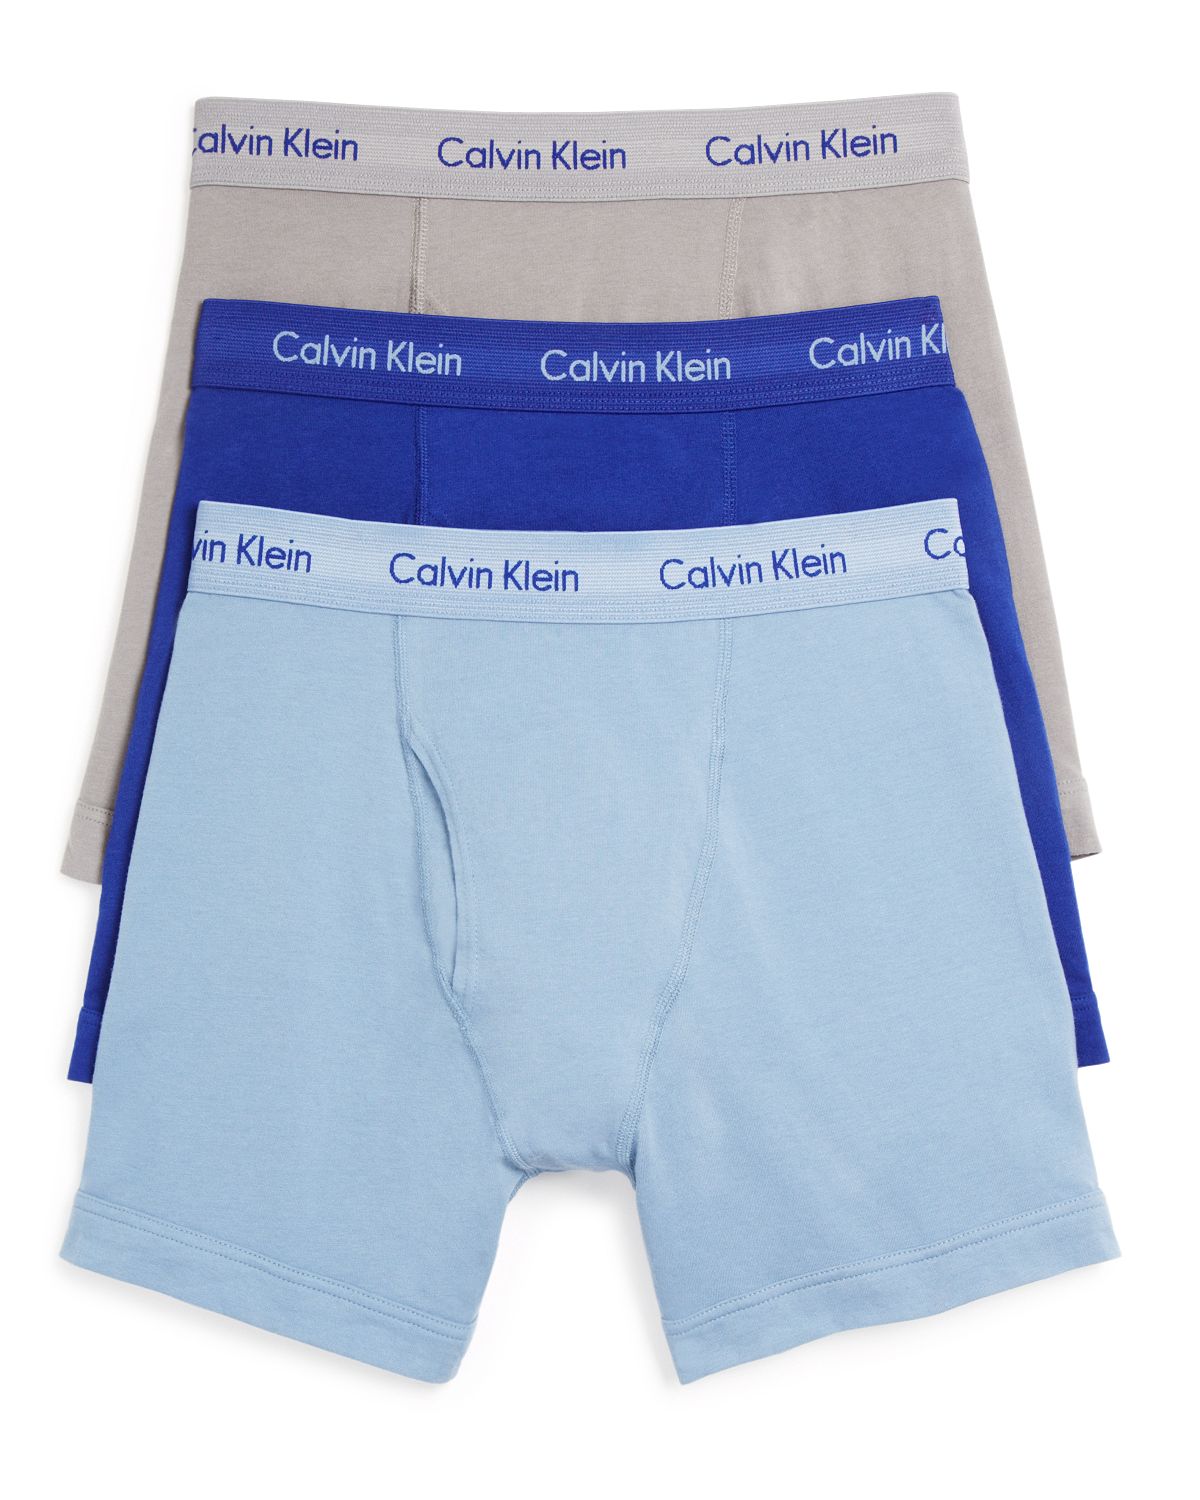 Calvin Klein Cotton Stretch Boxer Briefs Pack Of 3 Blue/Sky/Grey